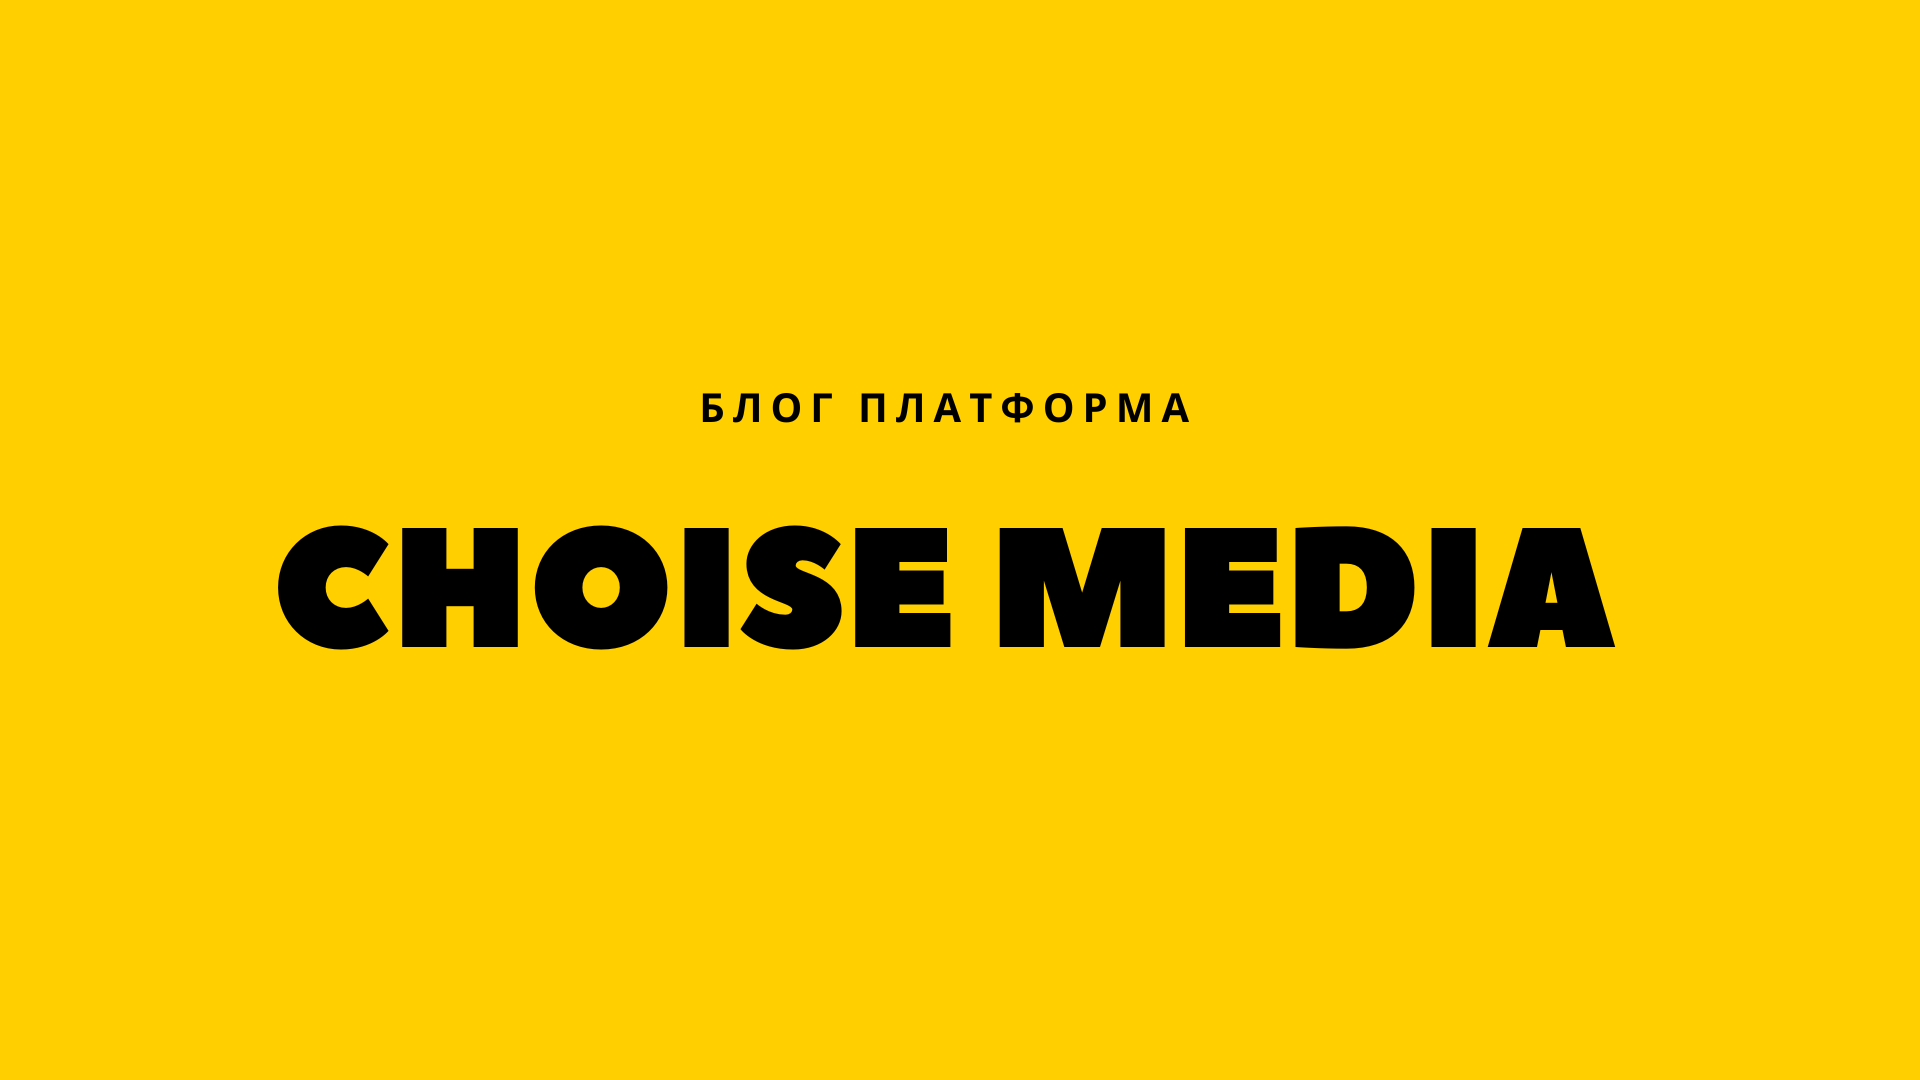 Choise Media - Блог платформа ⚡